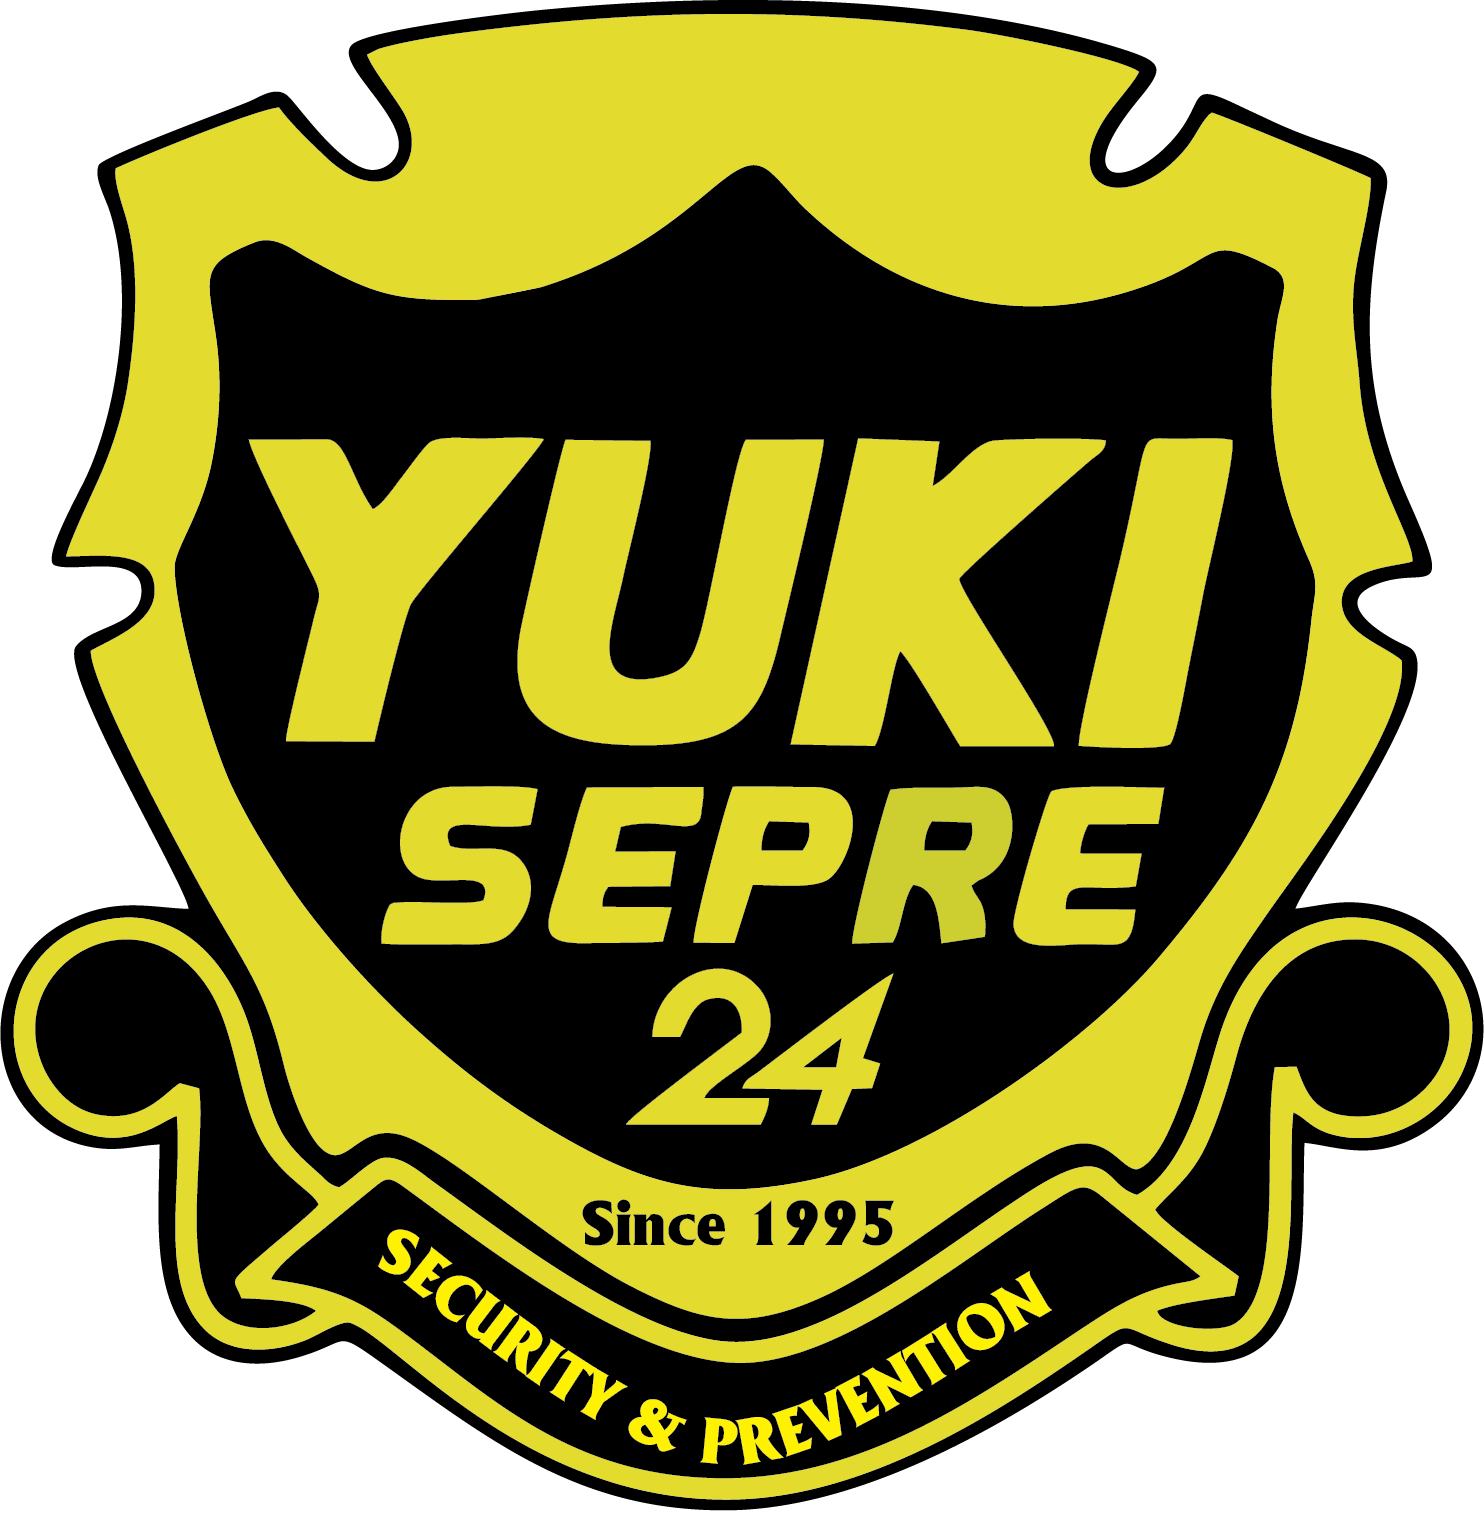 YUKI SEPRE 24 COMPANY INTRODUCTION